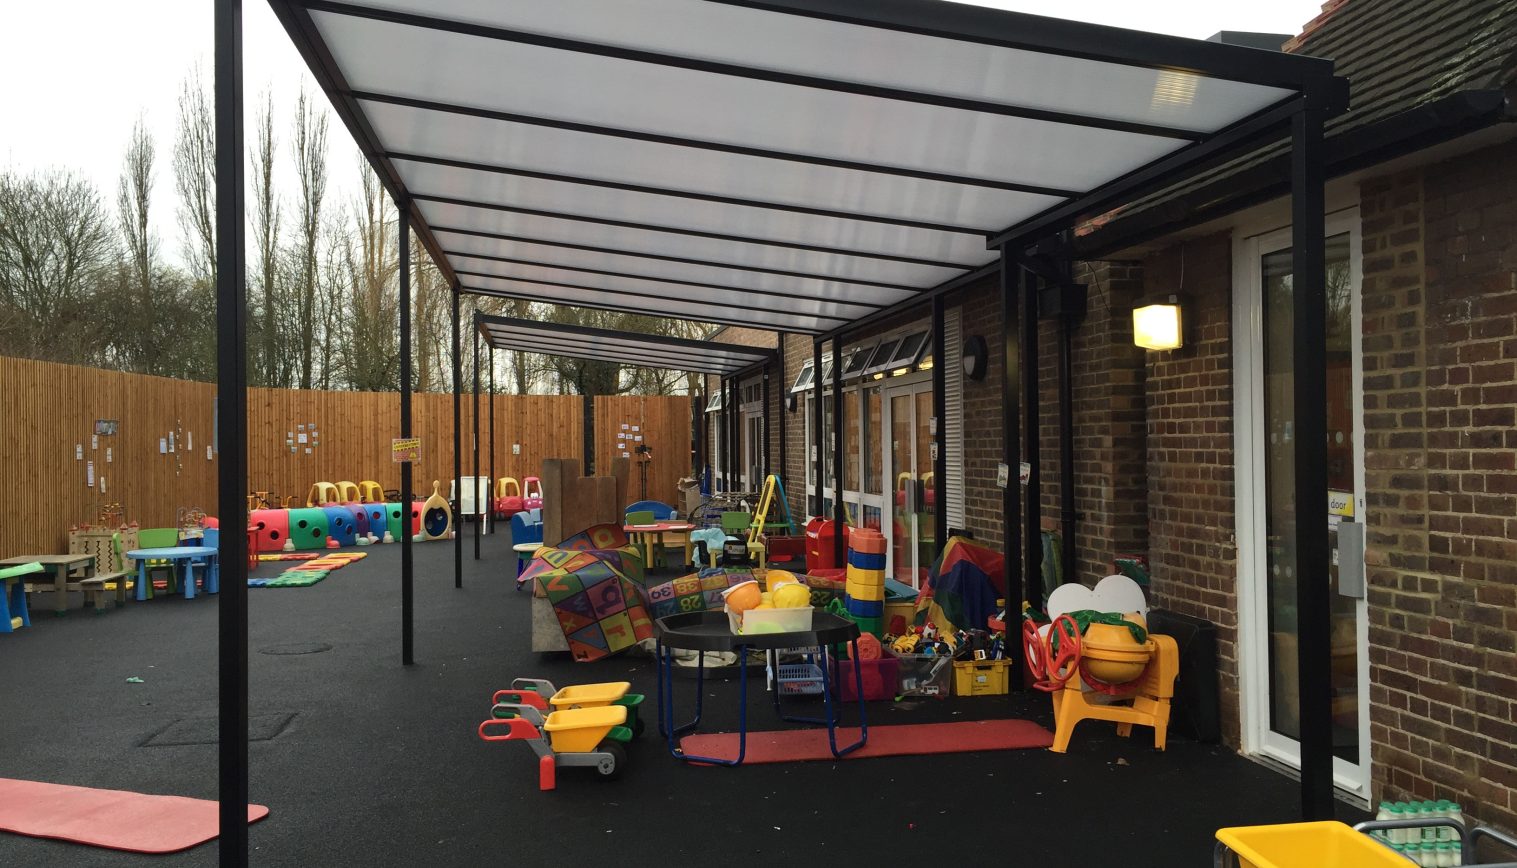 Camrose Primary School with Nursery